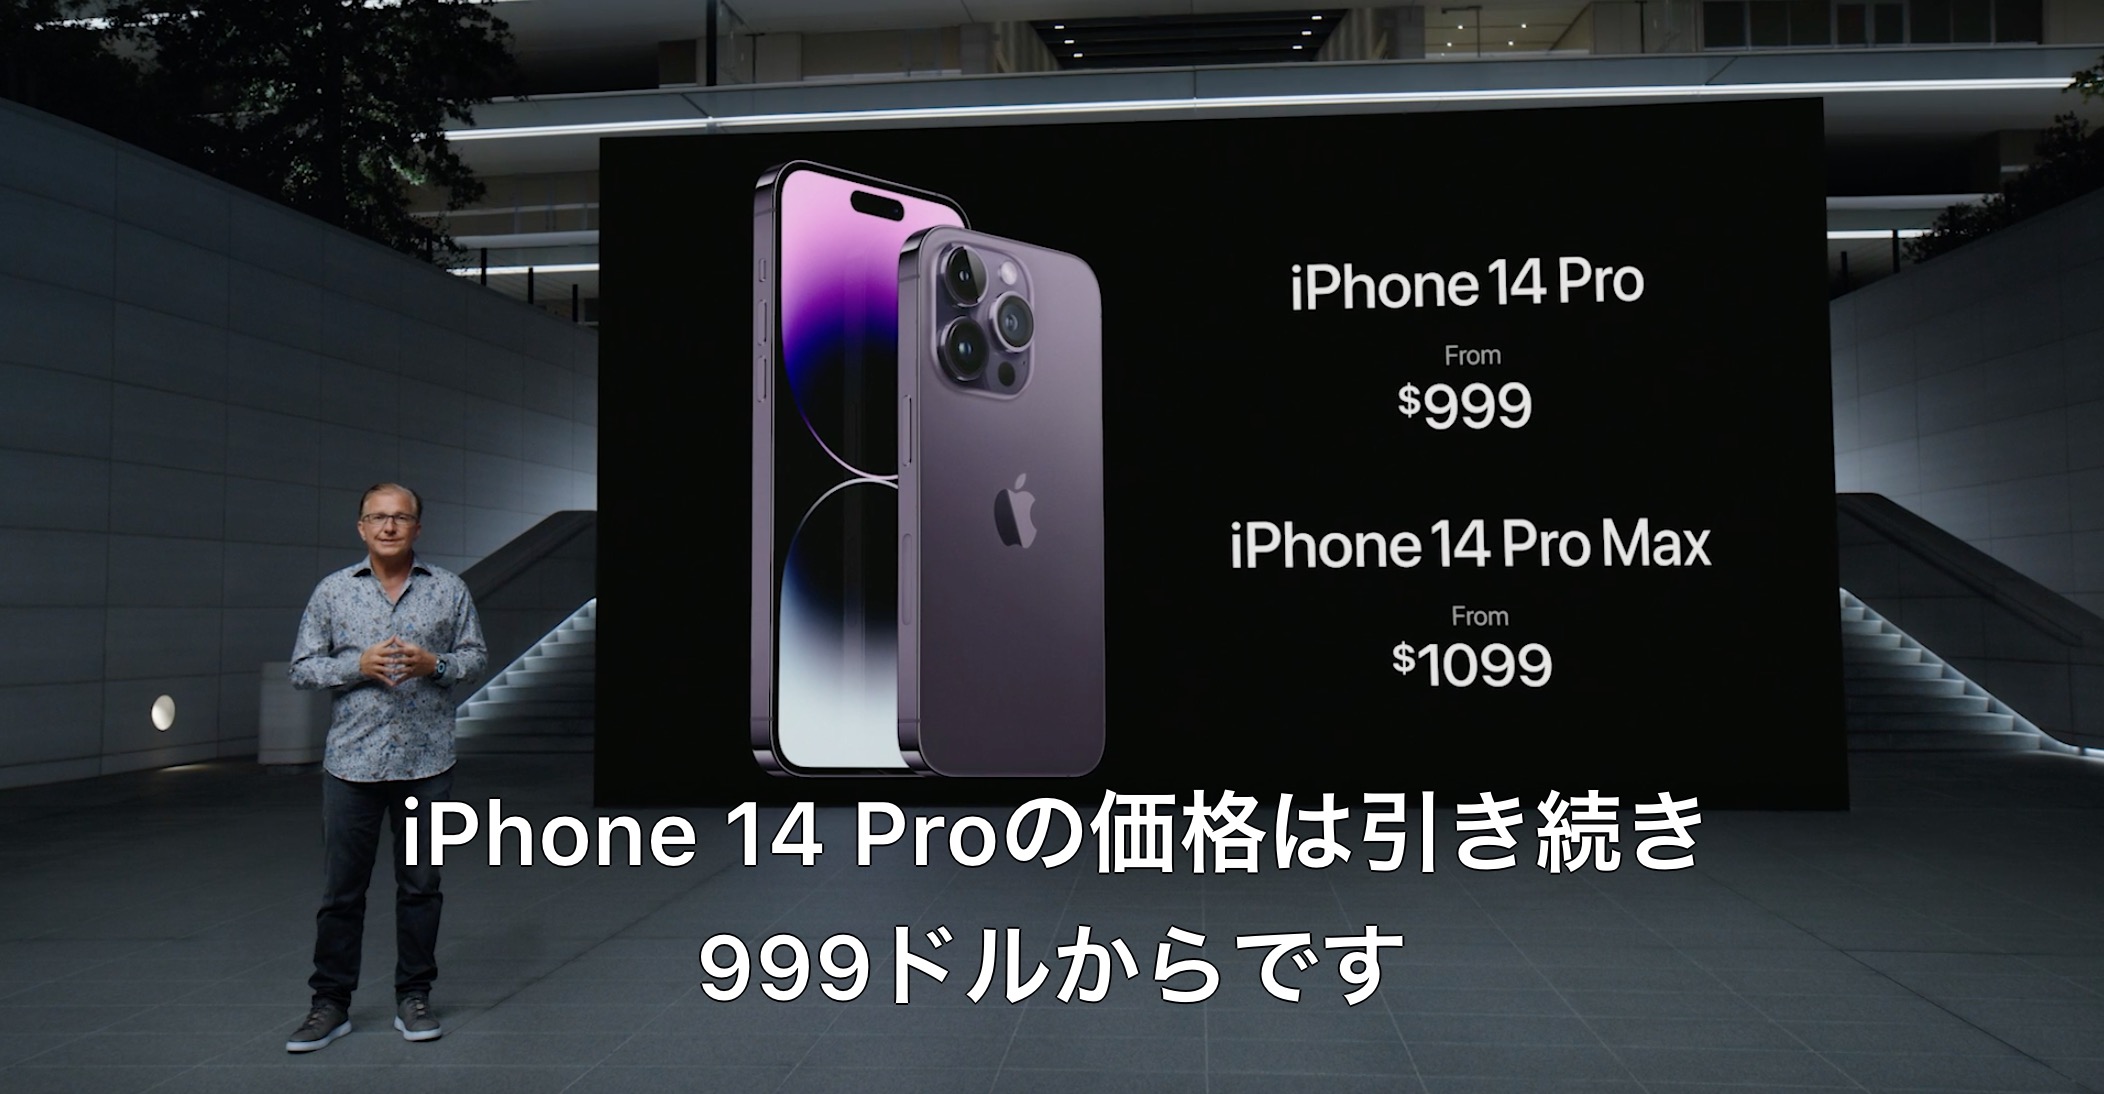 iPhone 14 Pro」の価格は999ドル、「iPhone 14 Pro Max」の価格は1099